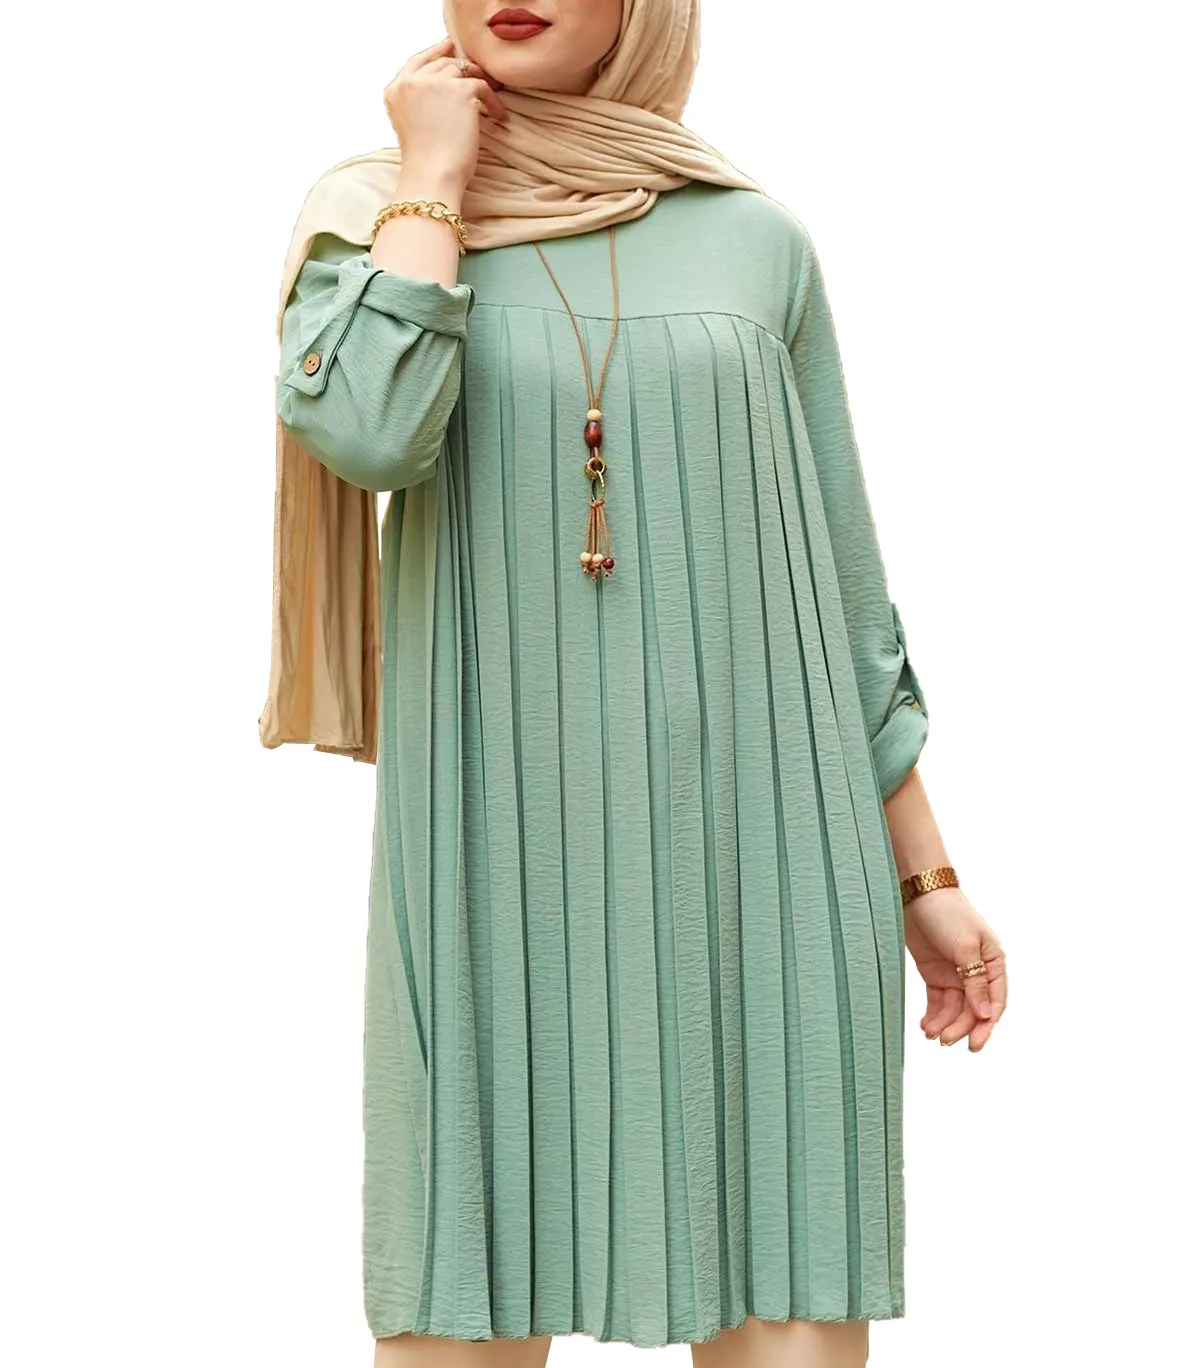 LLEID 5XL grande taille abaya plissée musulmane multicolore casual baju musulman dewasa tunique à manches longues blouse musulmane